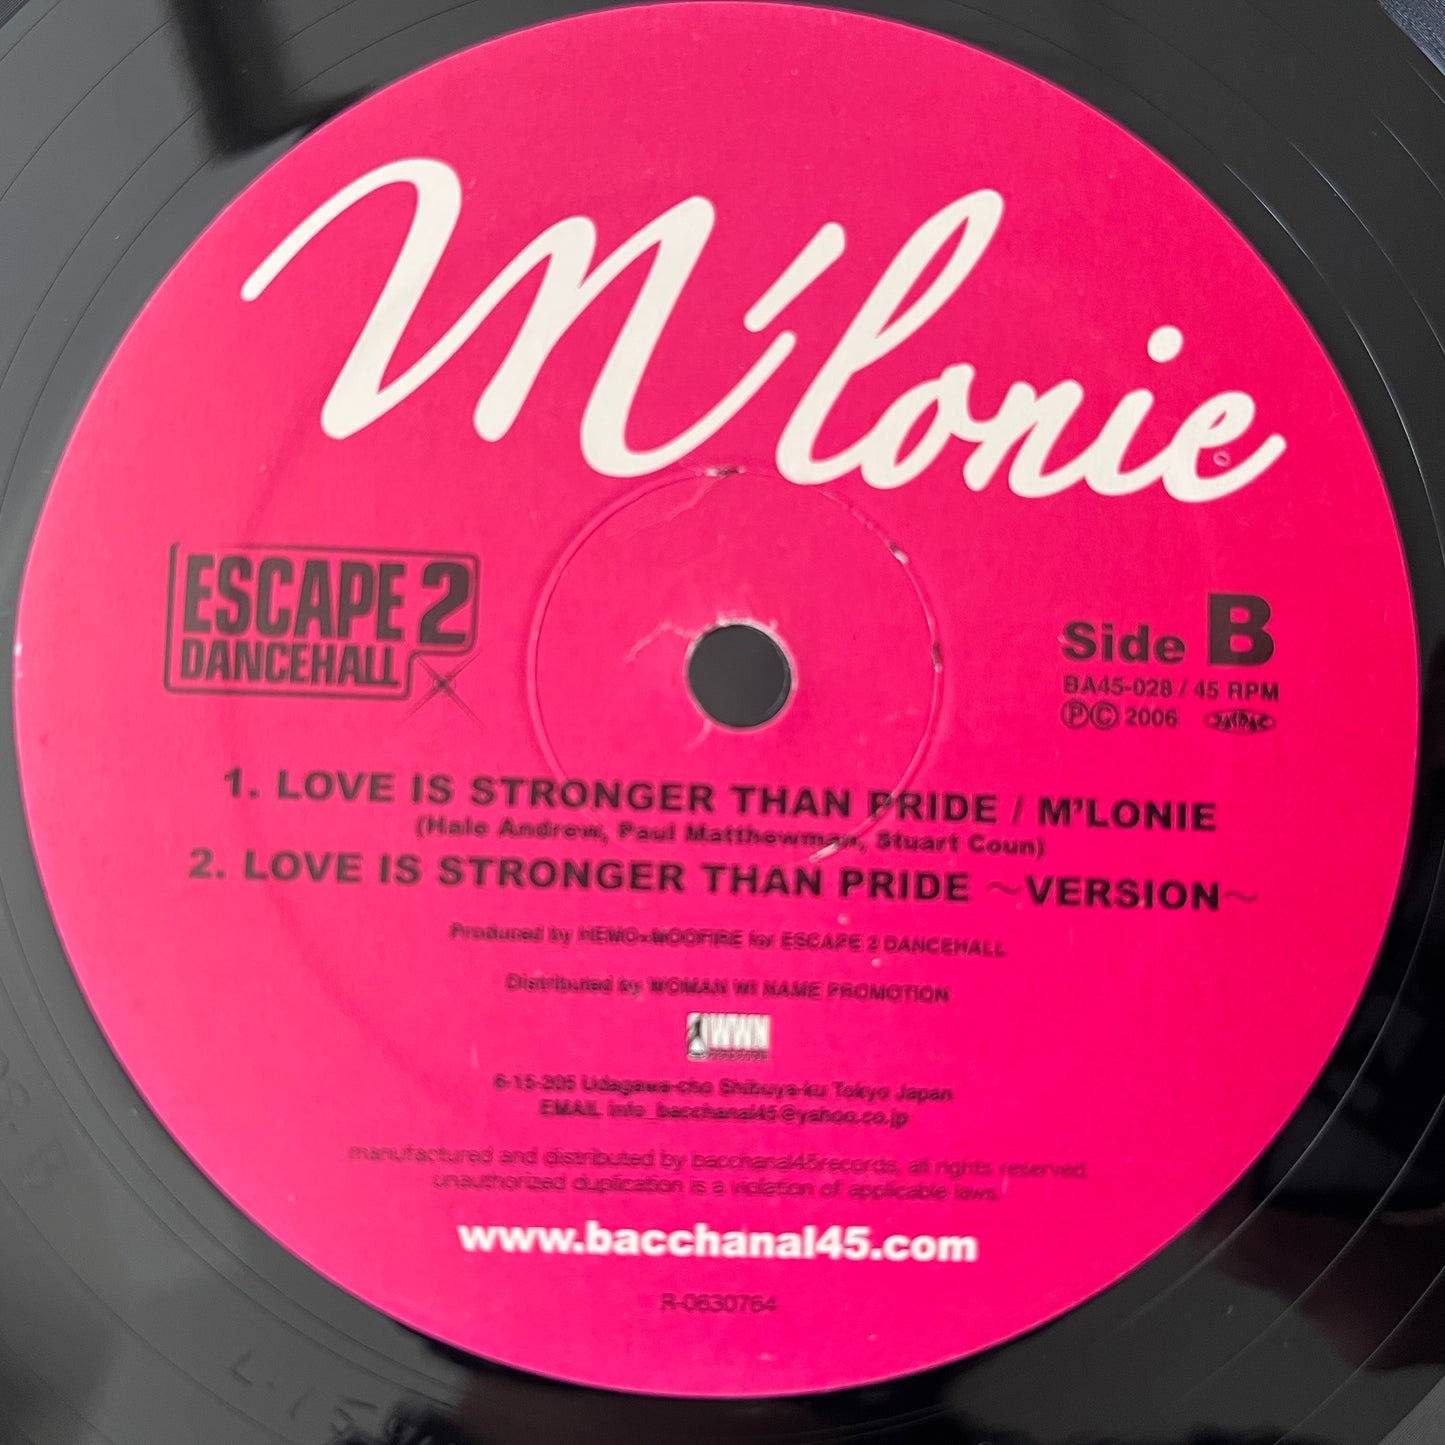 M'Lonie – Lovin' You / Love Is Stronger Than Pride